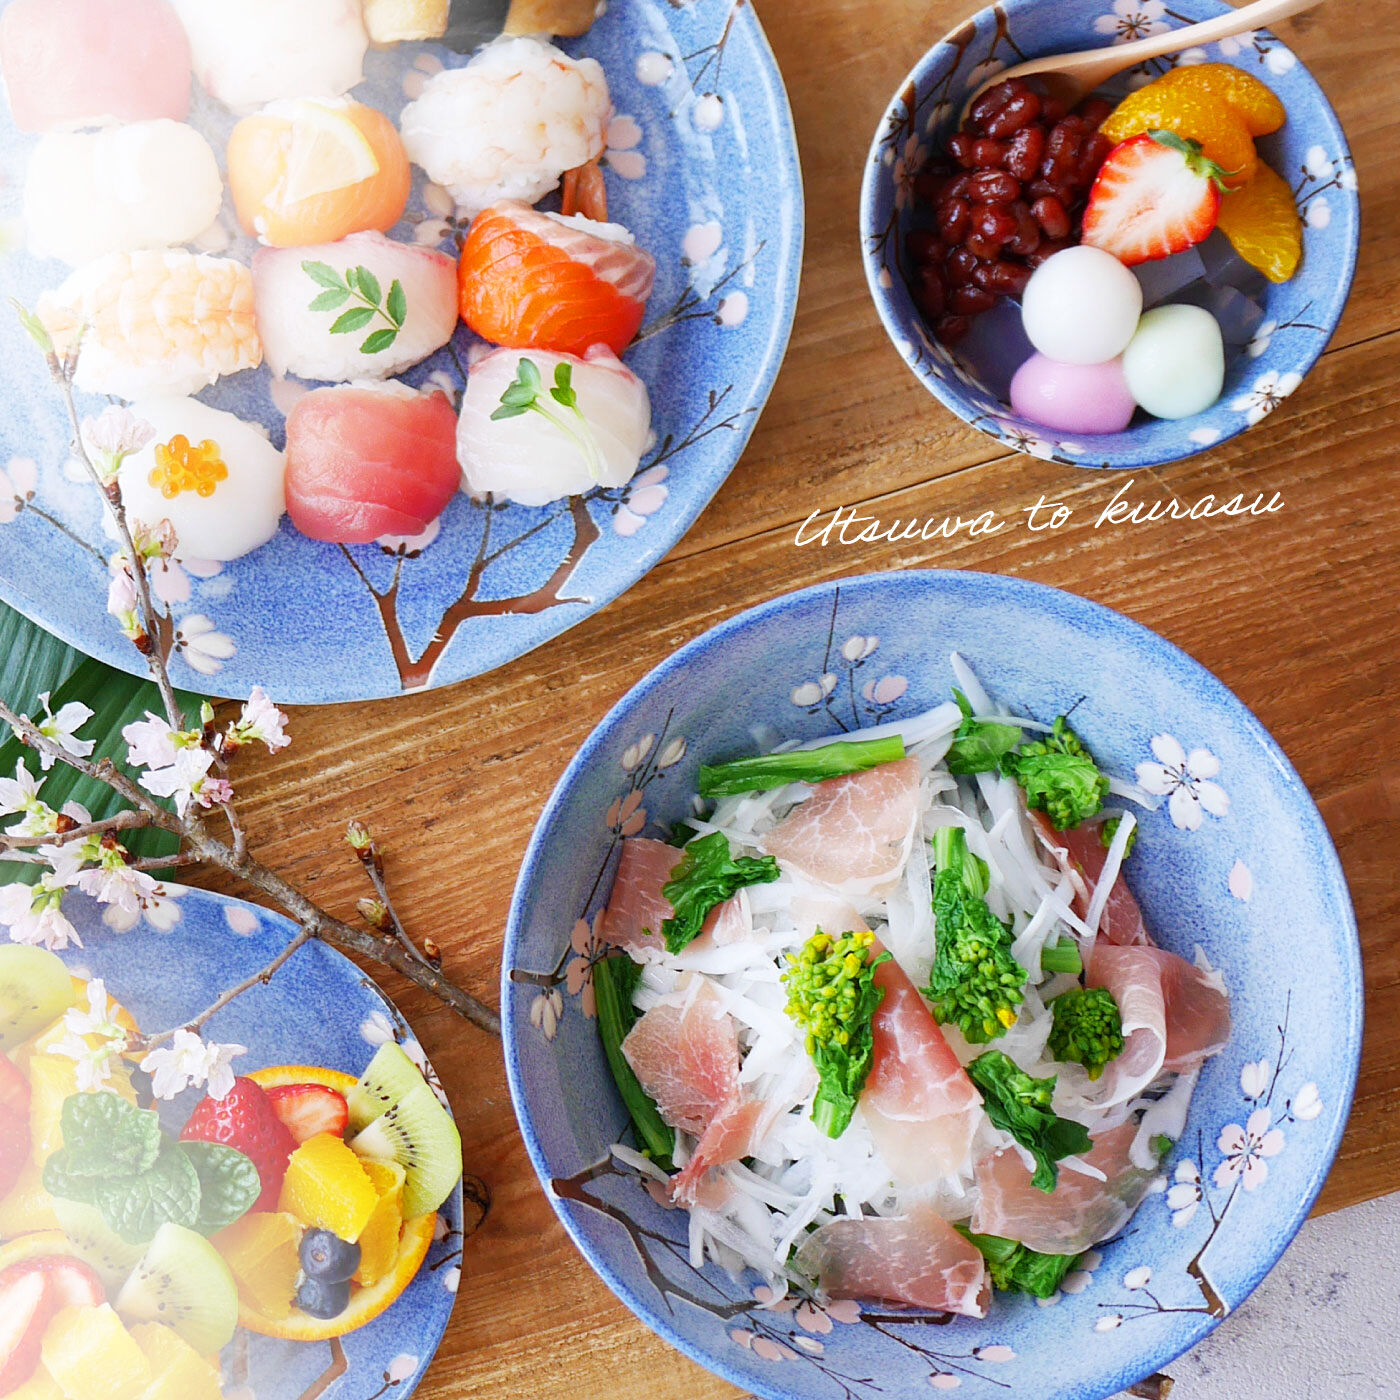 FELISSIMO PARTNERS|青空いっぱいに富士桜の器　麺鉢と茶碗のセット